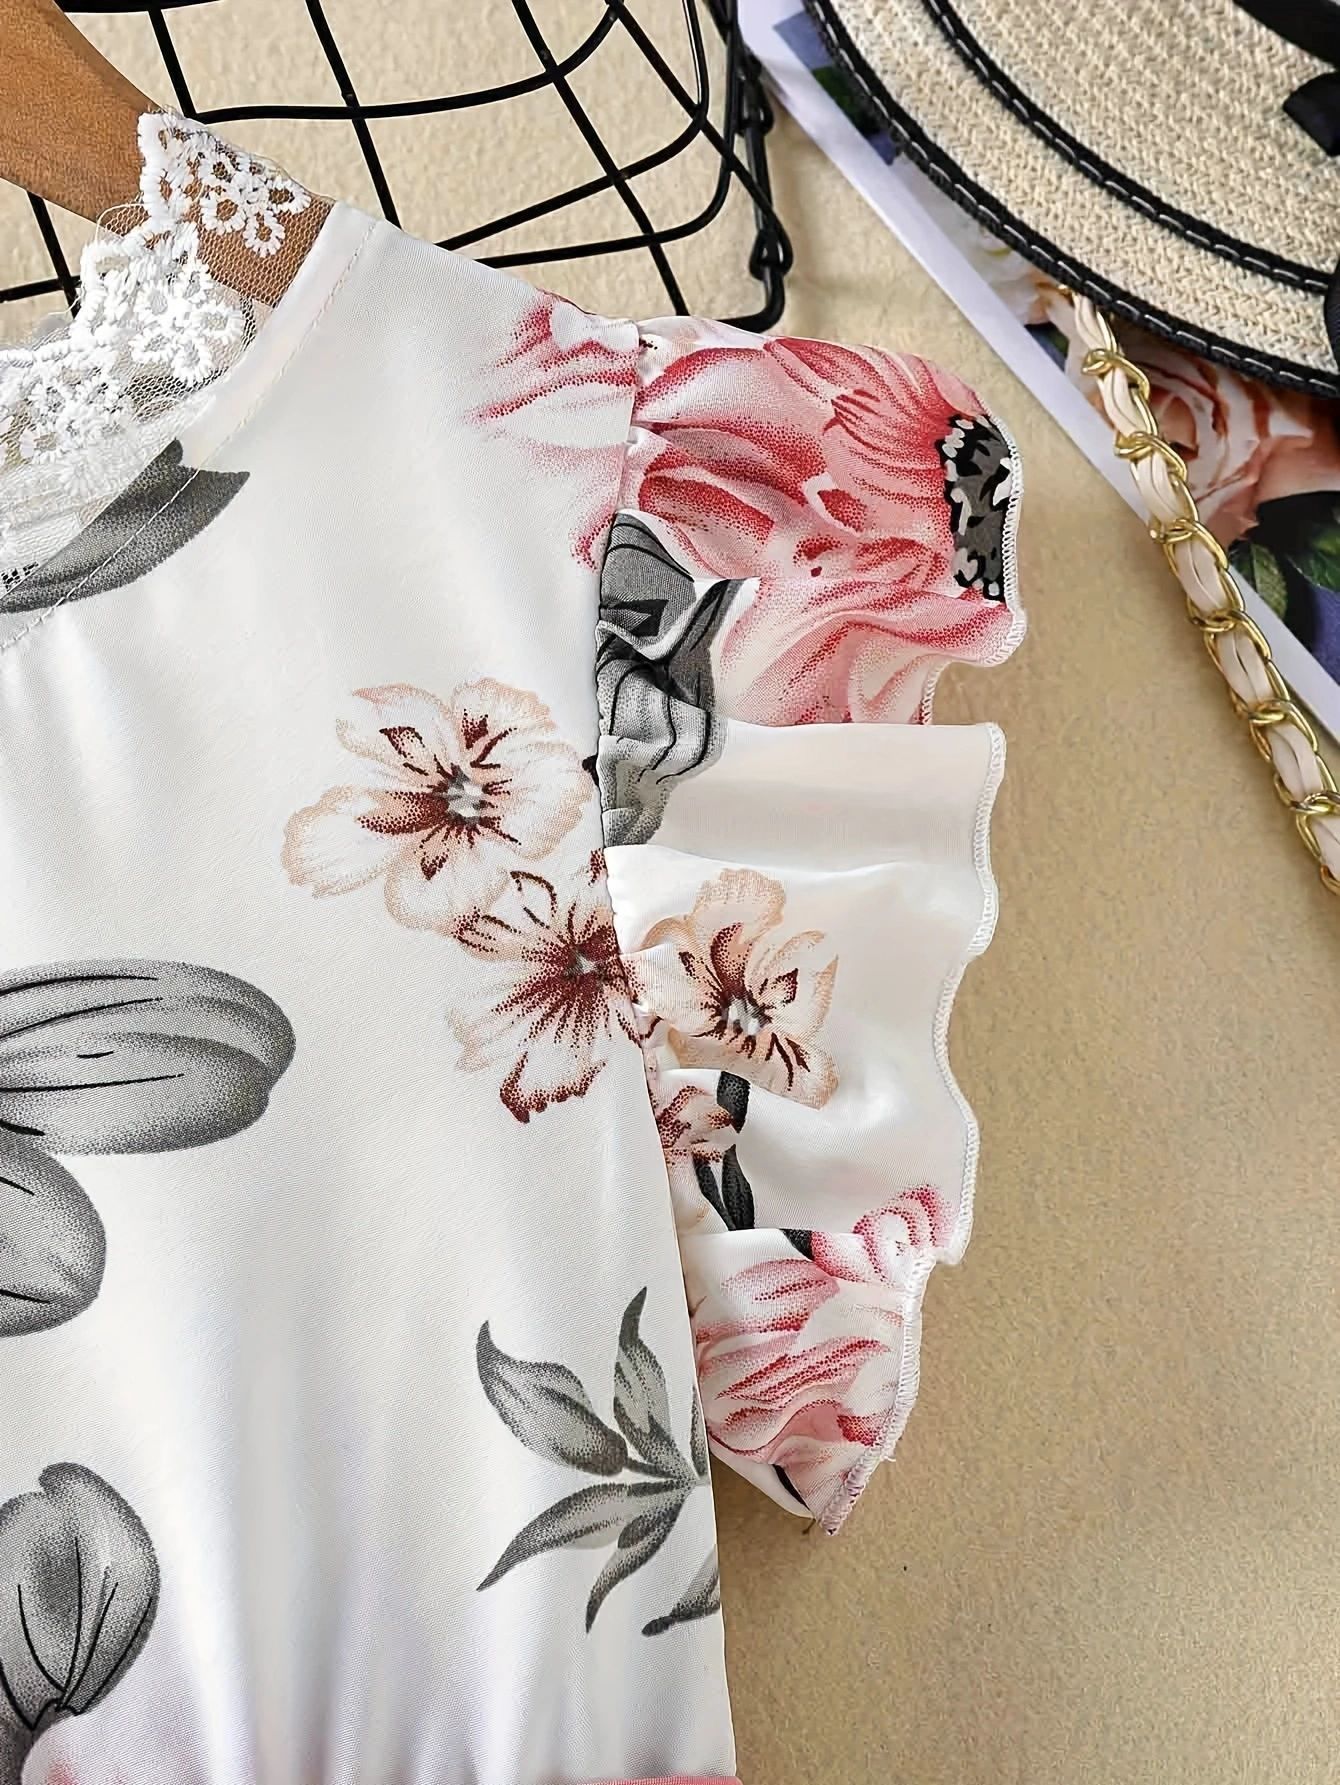 Girls' Flower Print Lace Dress